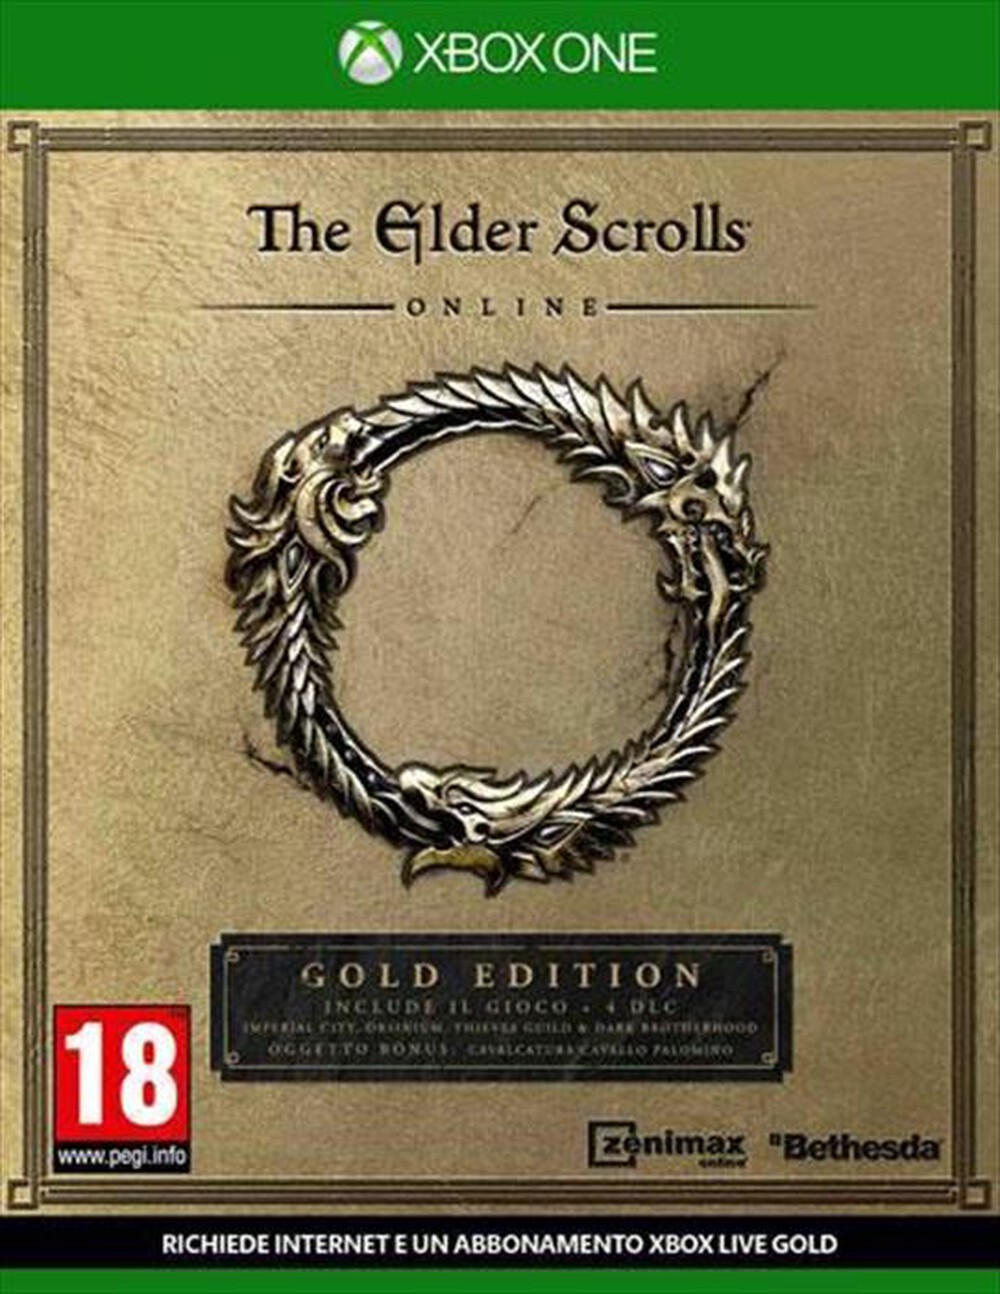 "KOCH MEDIA - The Elder Scrolls Online Gold Edition XBOXONE"